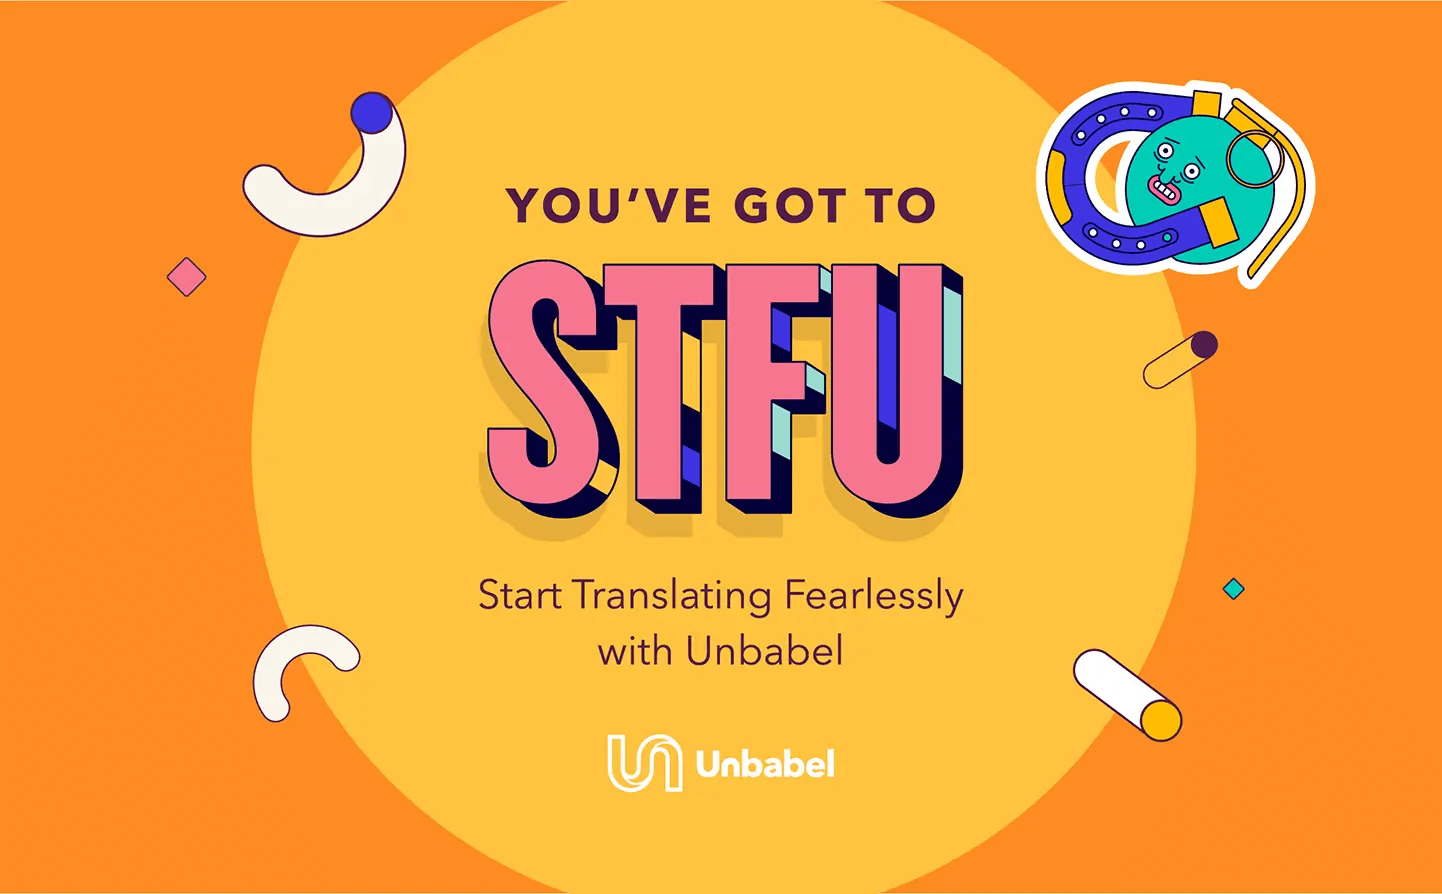 Unbabel STFU campaign marketing ideas